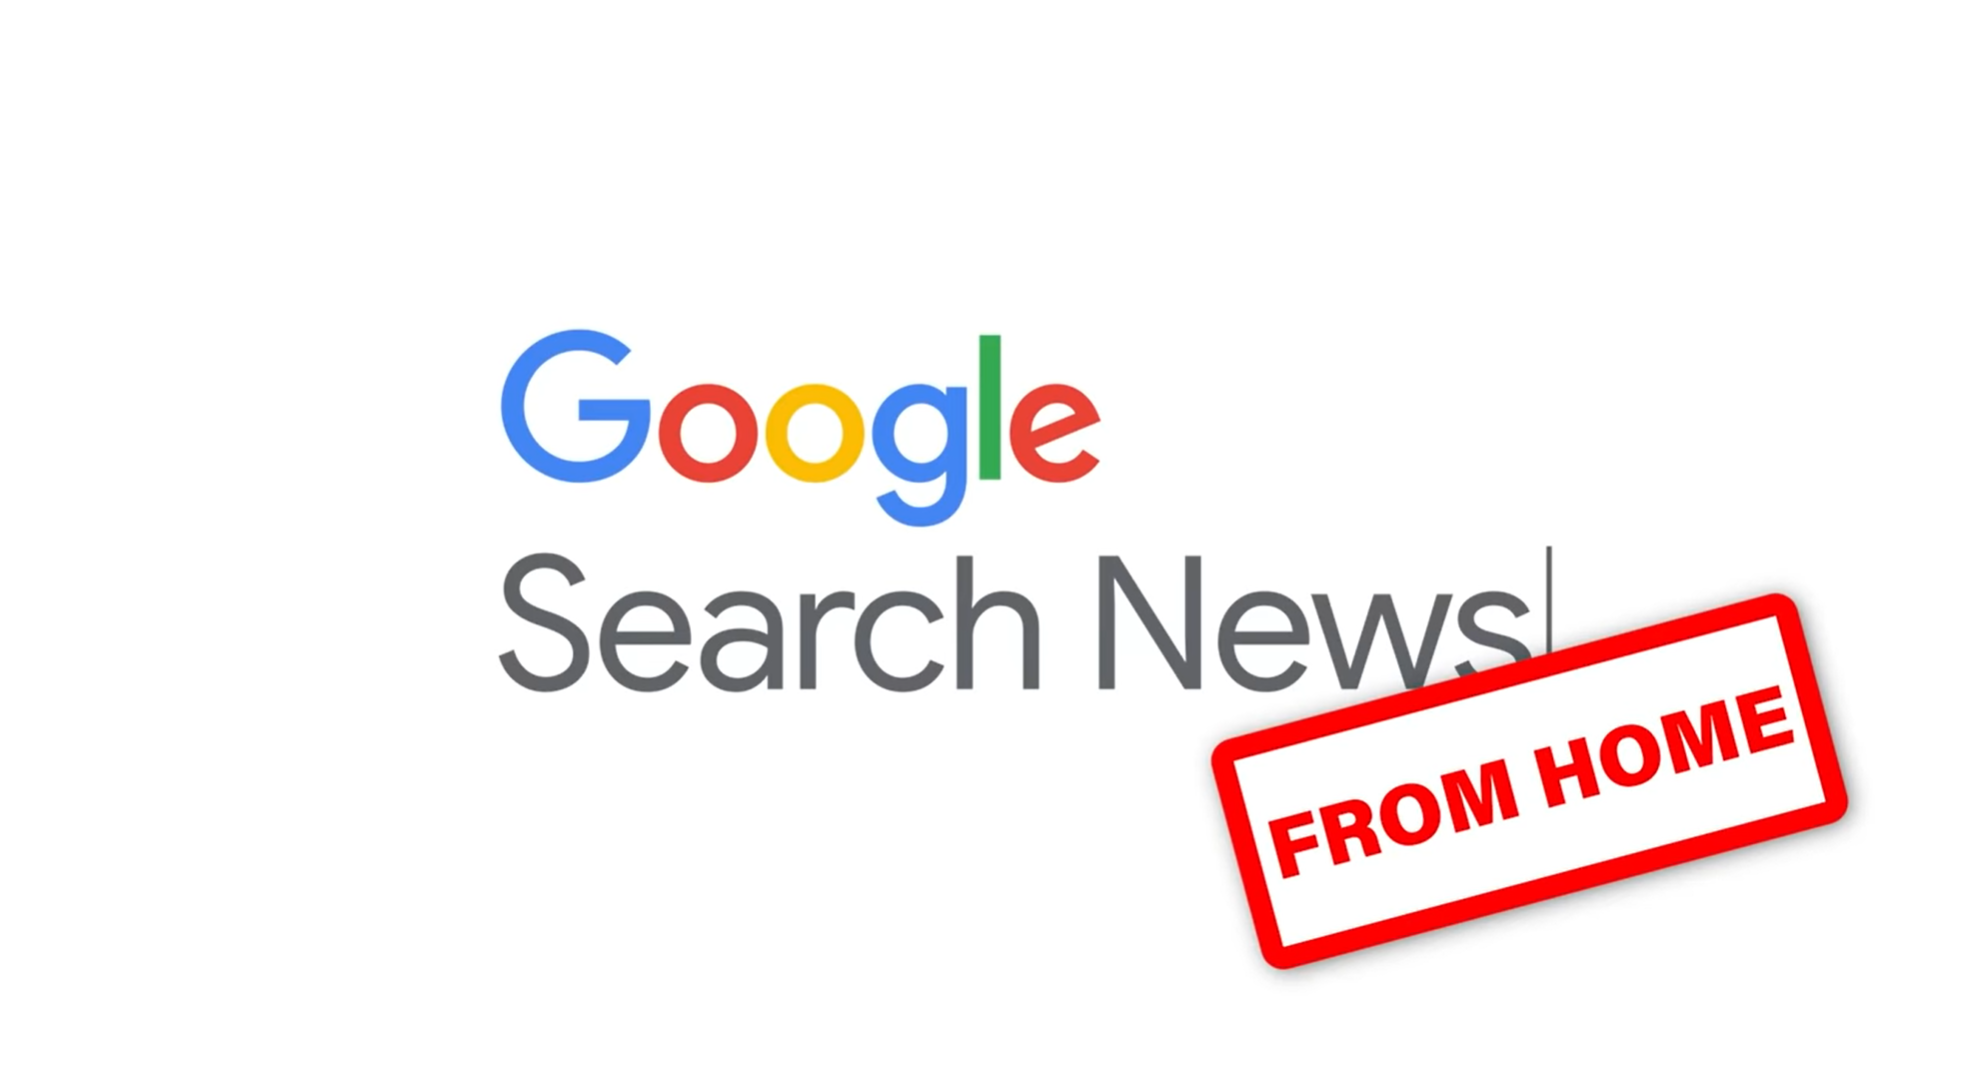 Google Search News